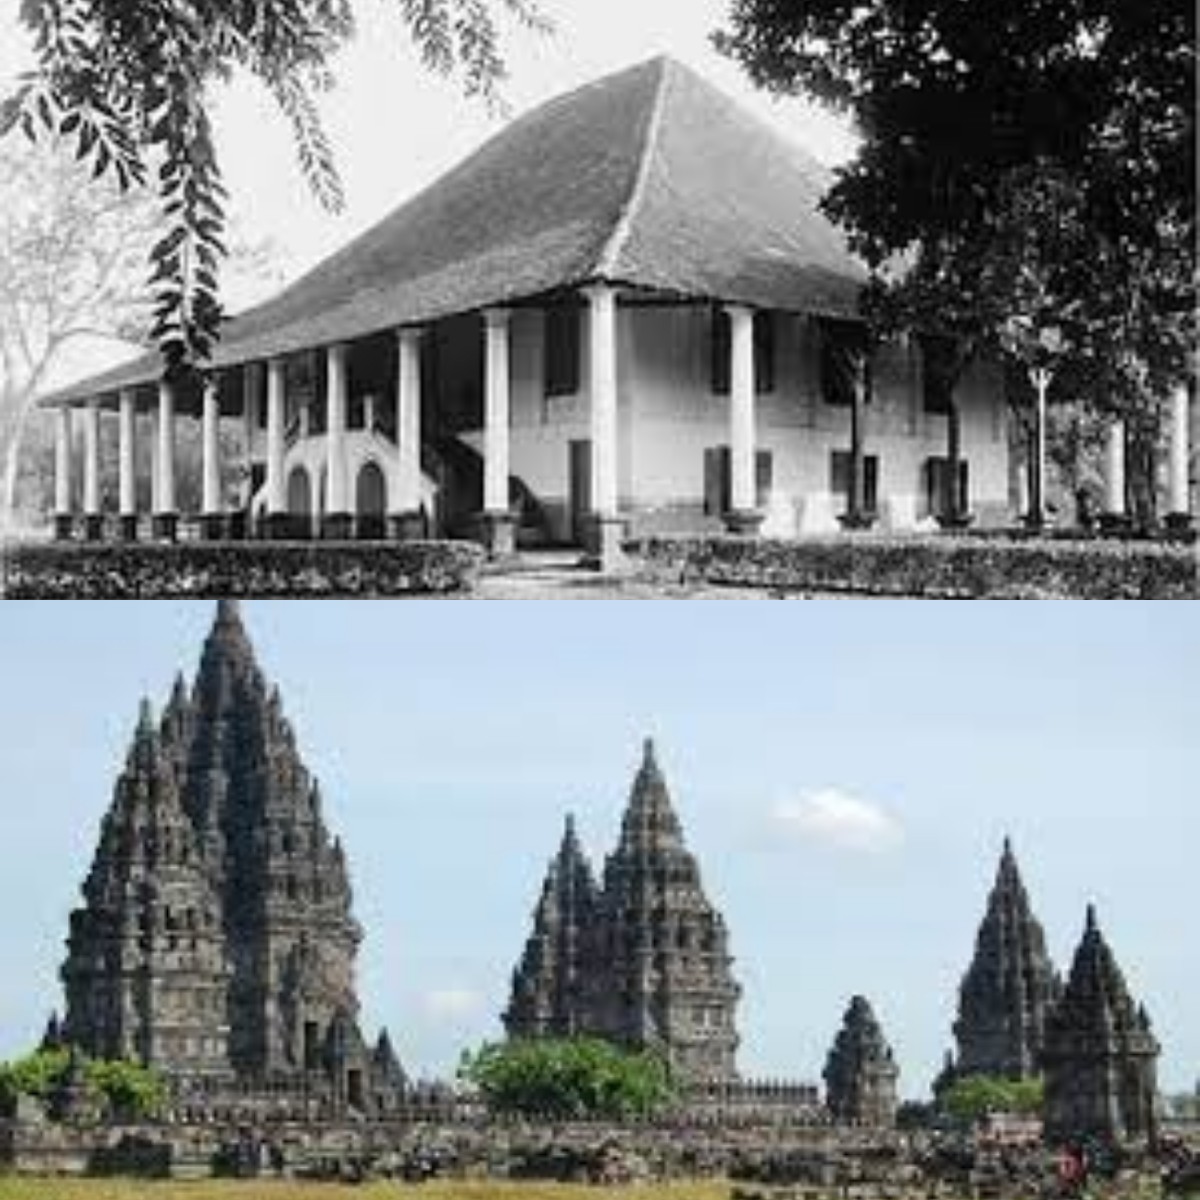 Mengenang Masa Lalu! Inilah Sederet Bangunan Tua Pneinggalan Zaman Dahulu di Indonesia 